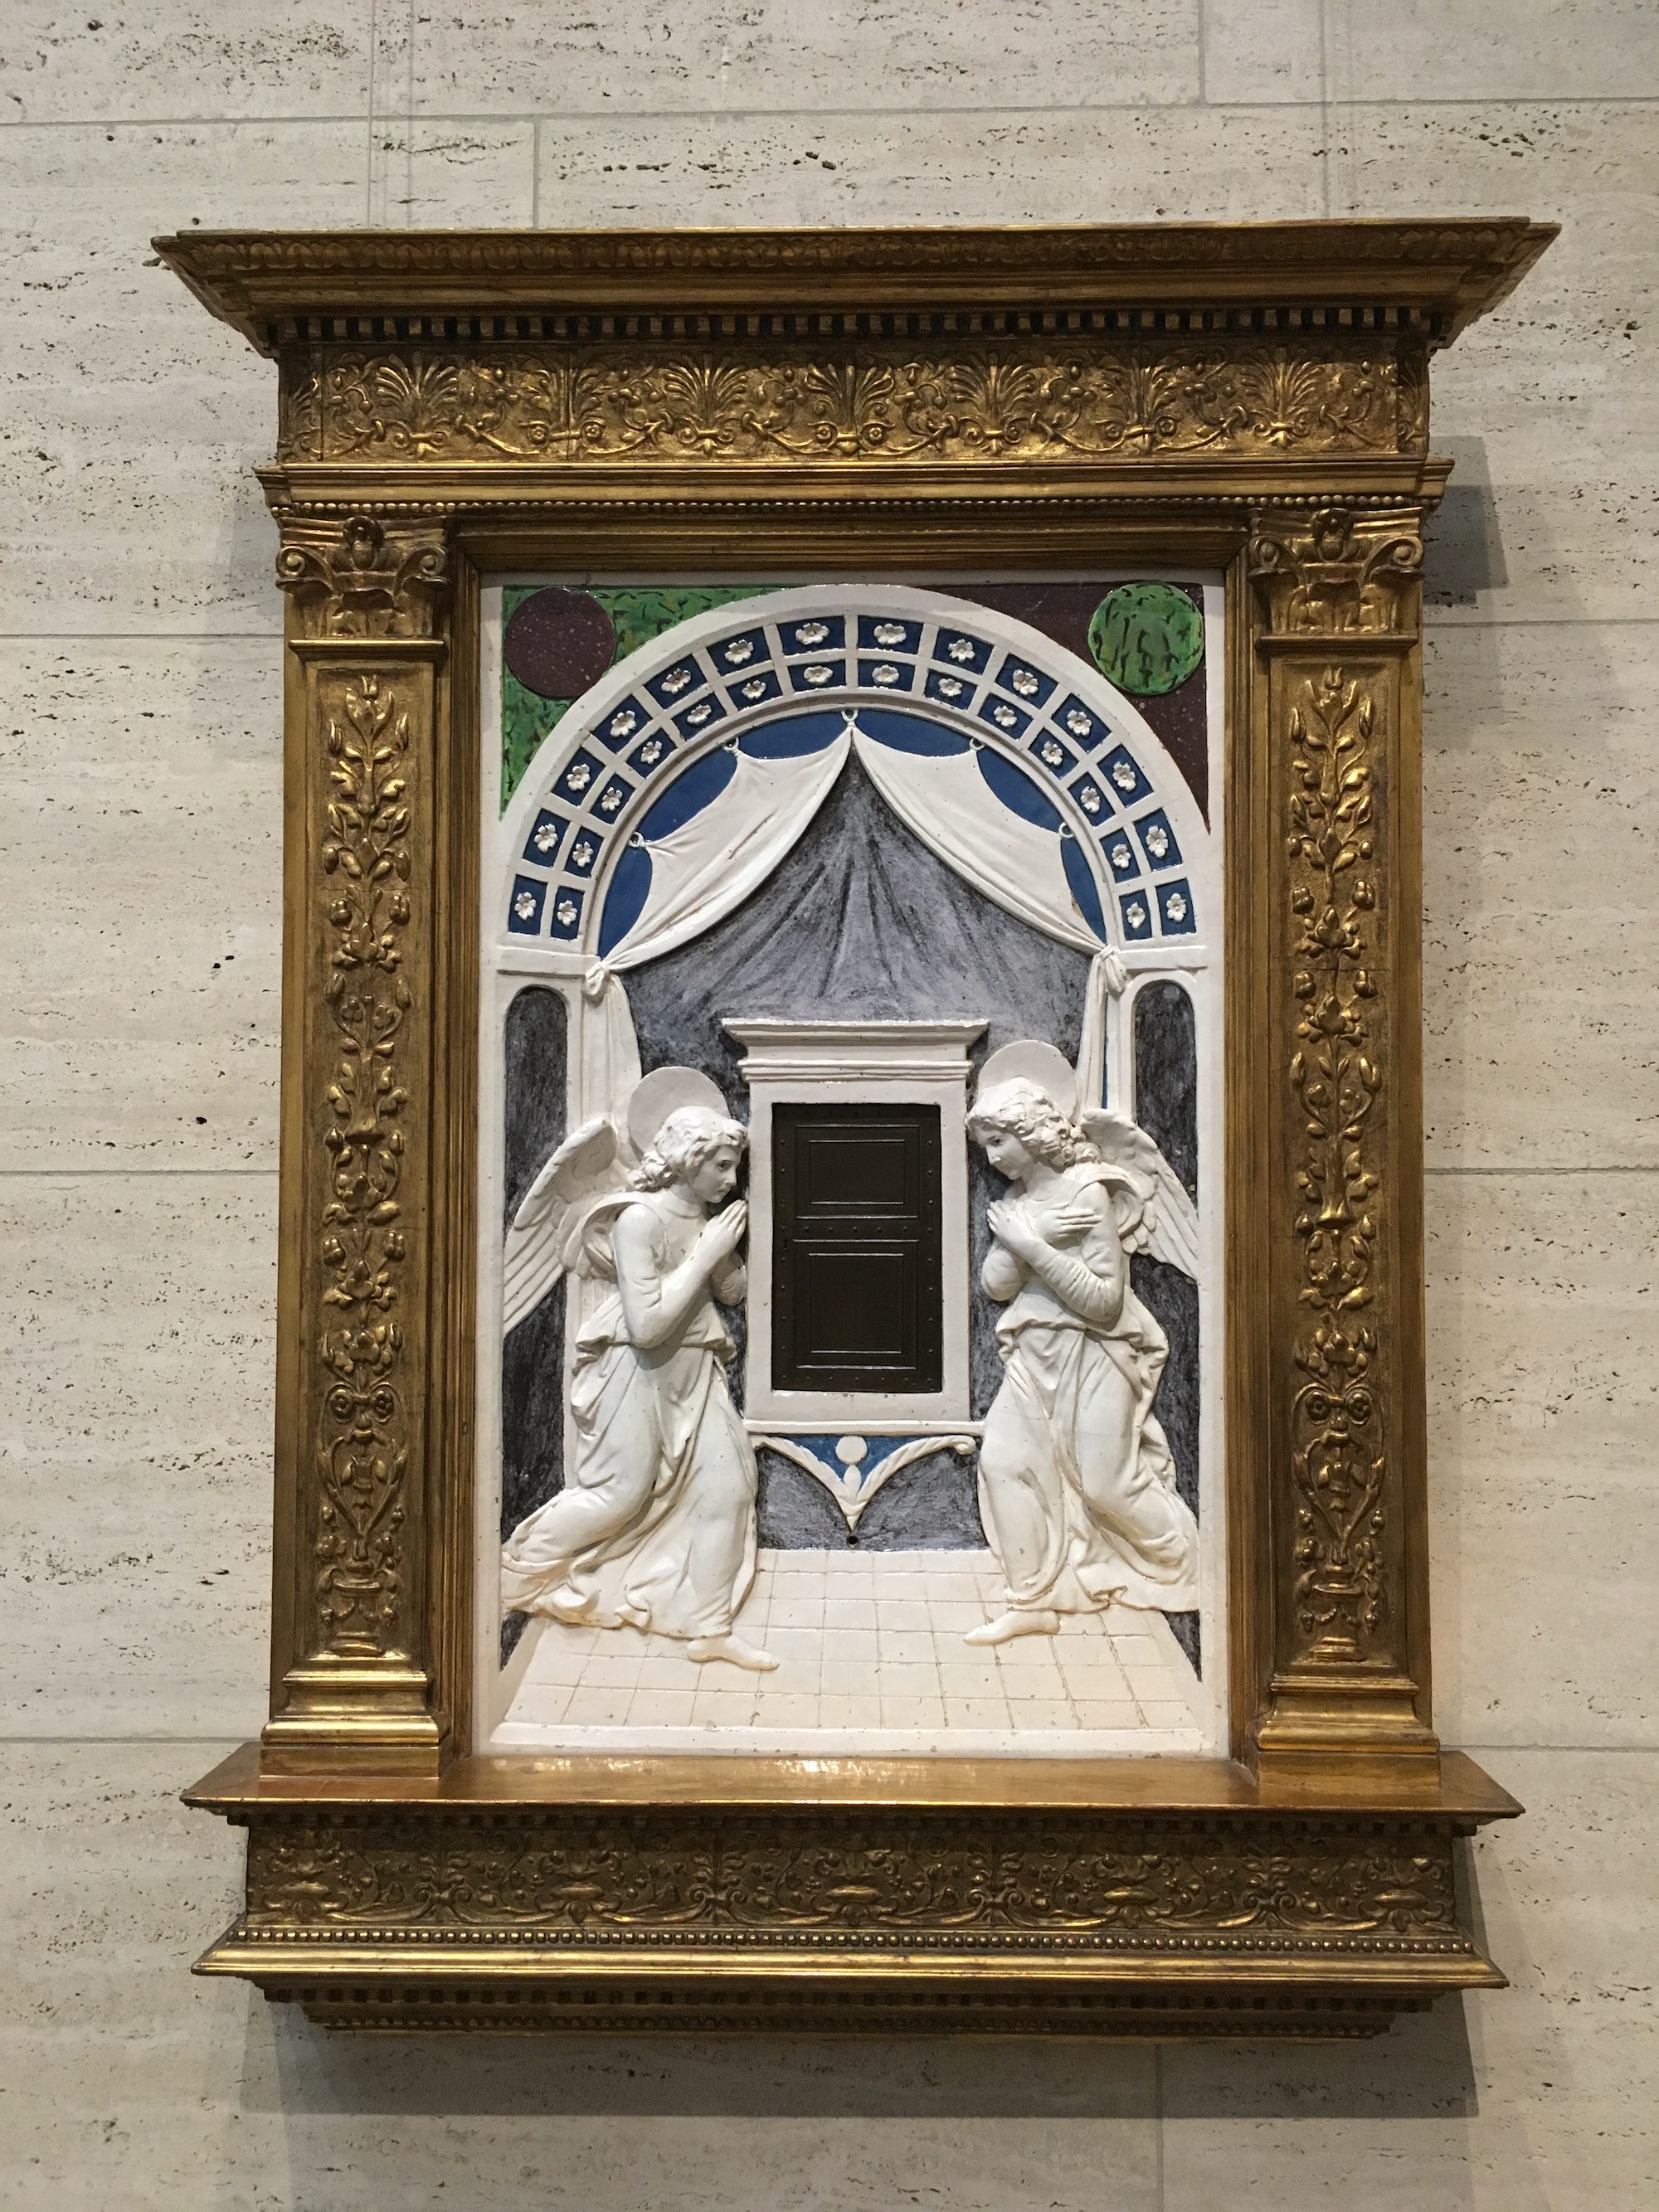 Tabernacle by Andrea della Robbia - c. 1470 